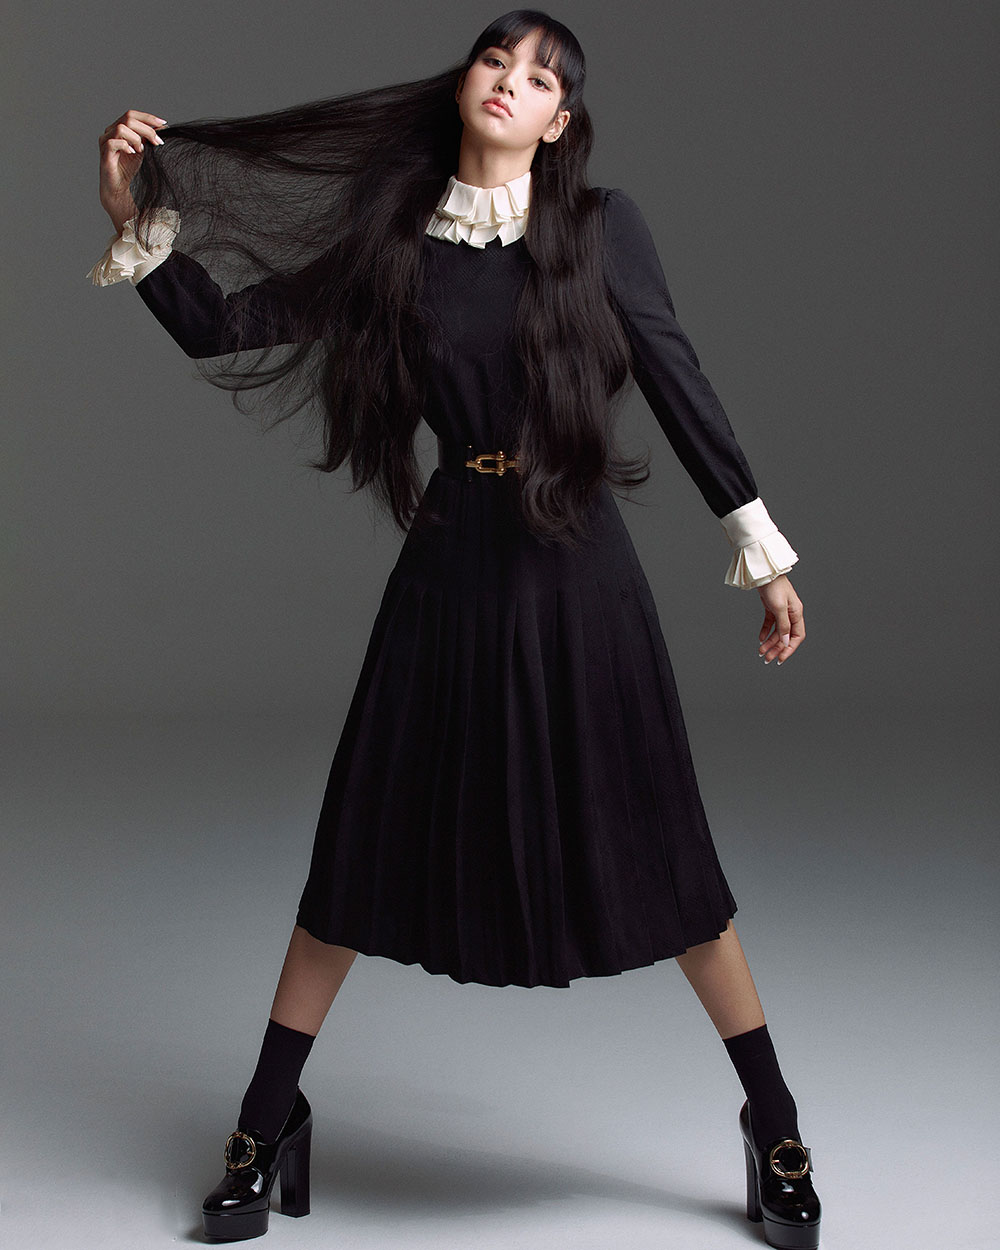 Blackpink covers Elle US October 2020 by Kim Hee June